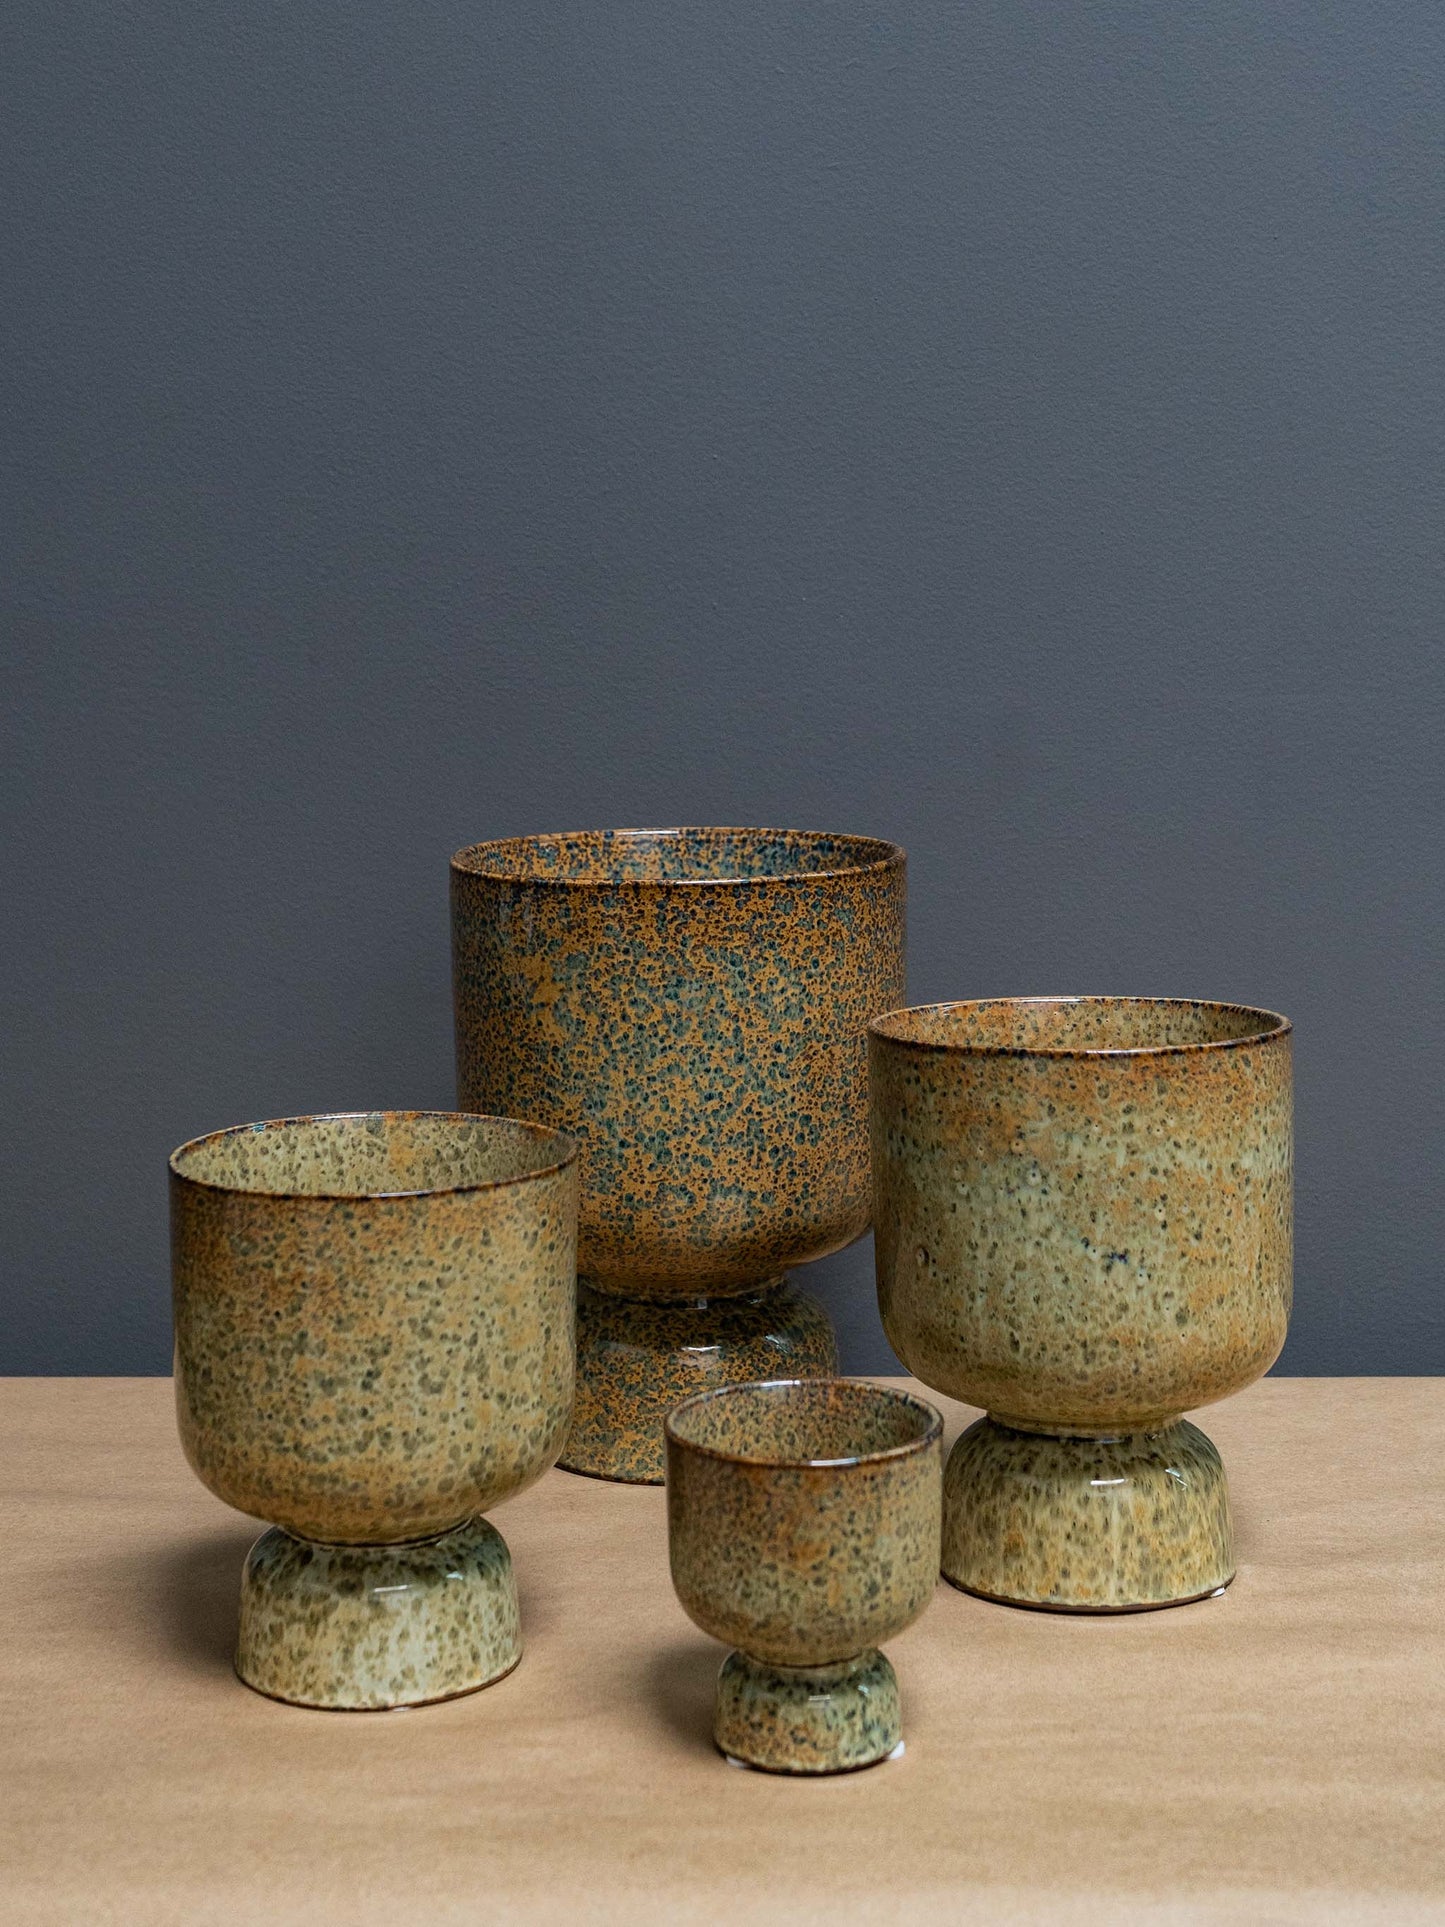 Ceramic Footed Vases Rustic Patina Tan and Green